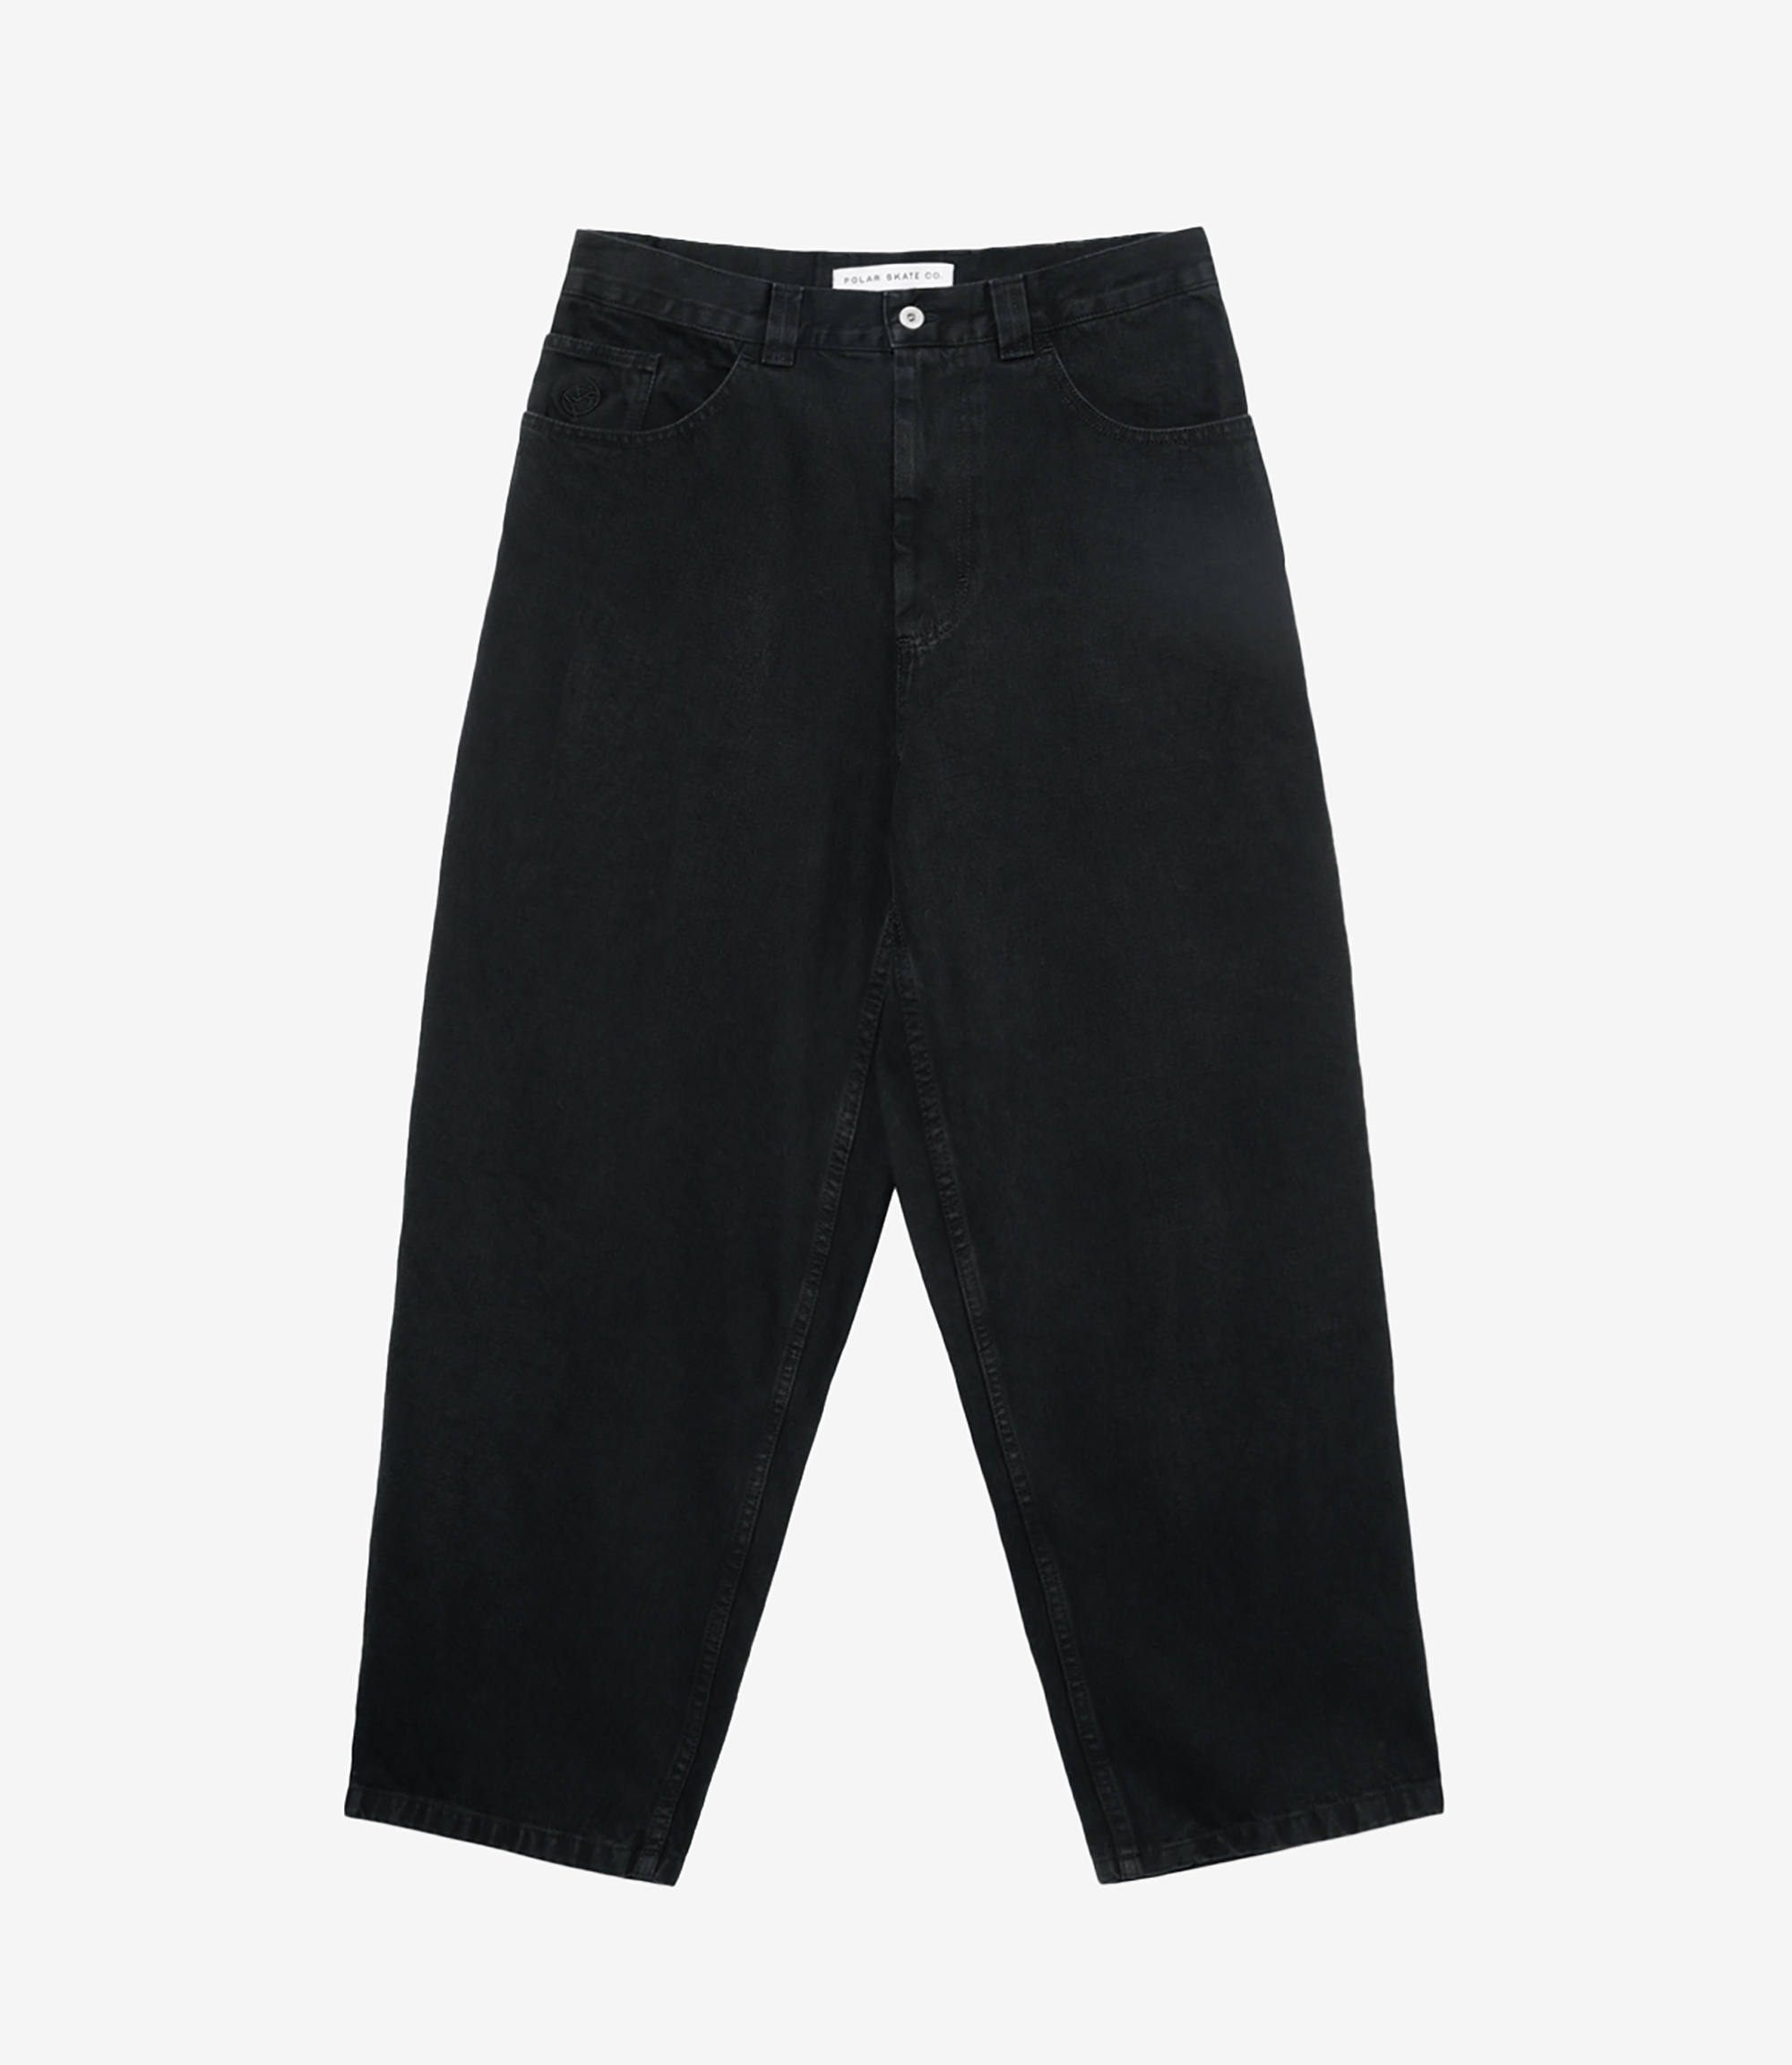 Shop Polar Skate Co Big Boy Jeans Pitch Black at itk online store